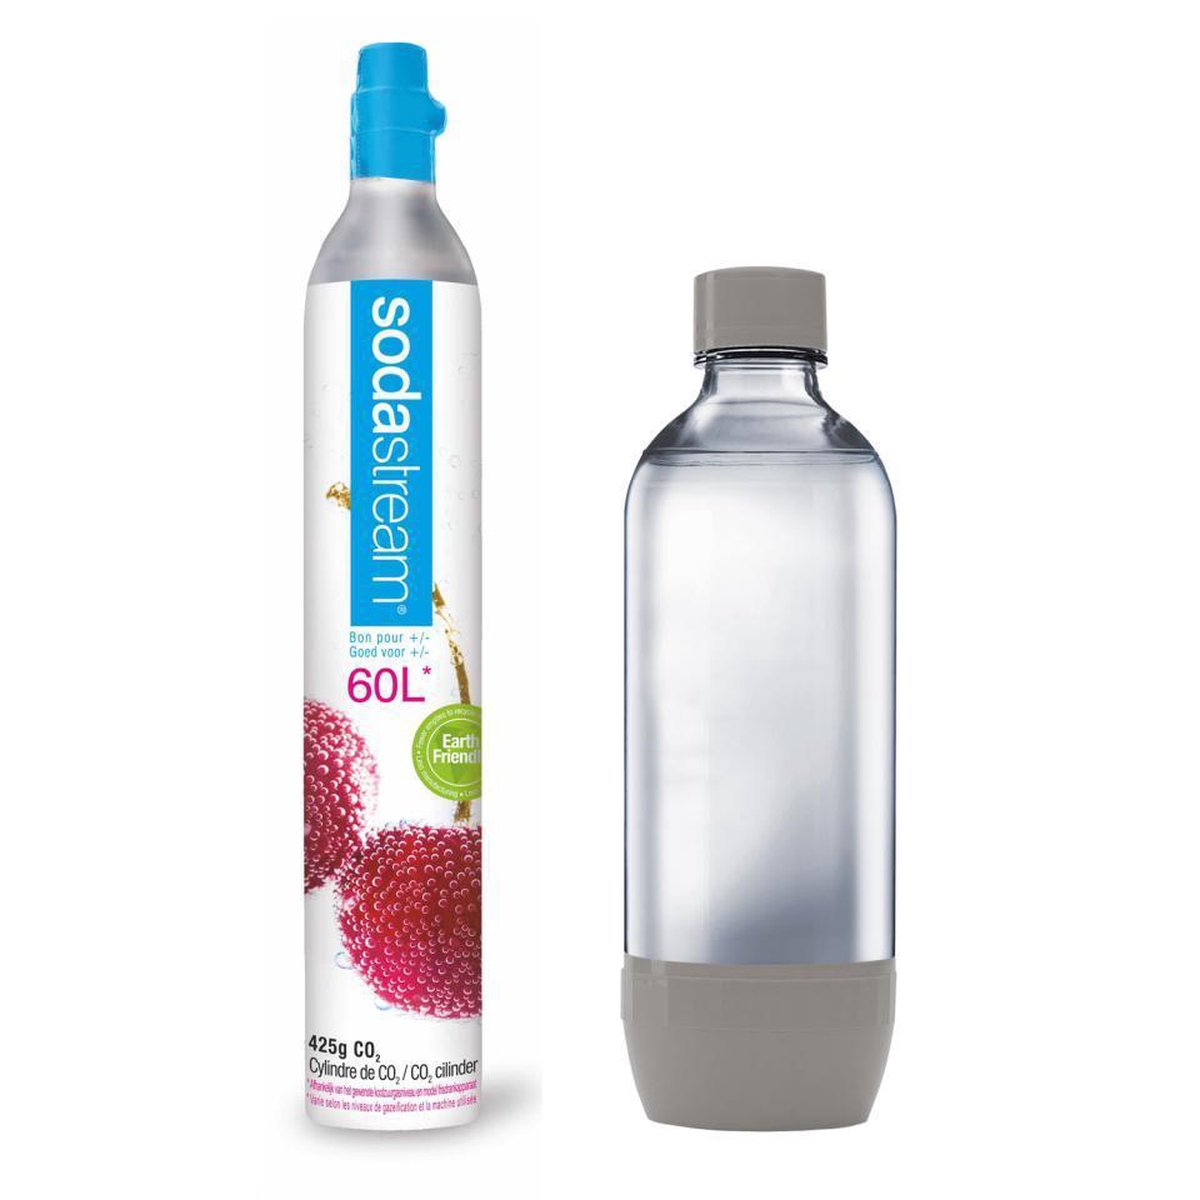 SodaStream Reserve Pack cilinder + grijze fles 1L - SodaStream